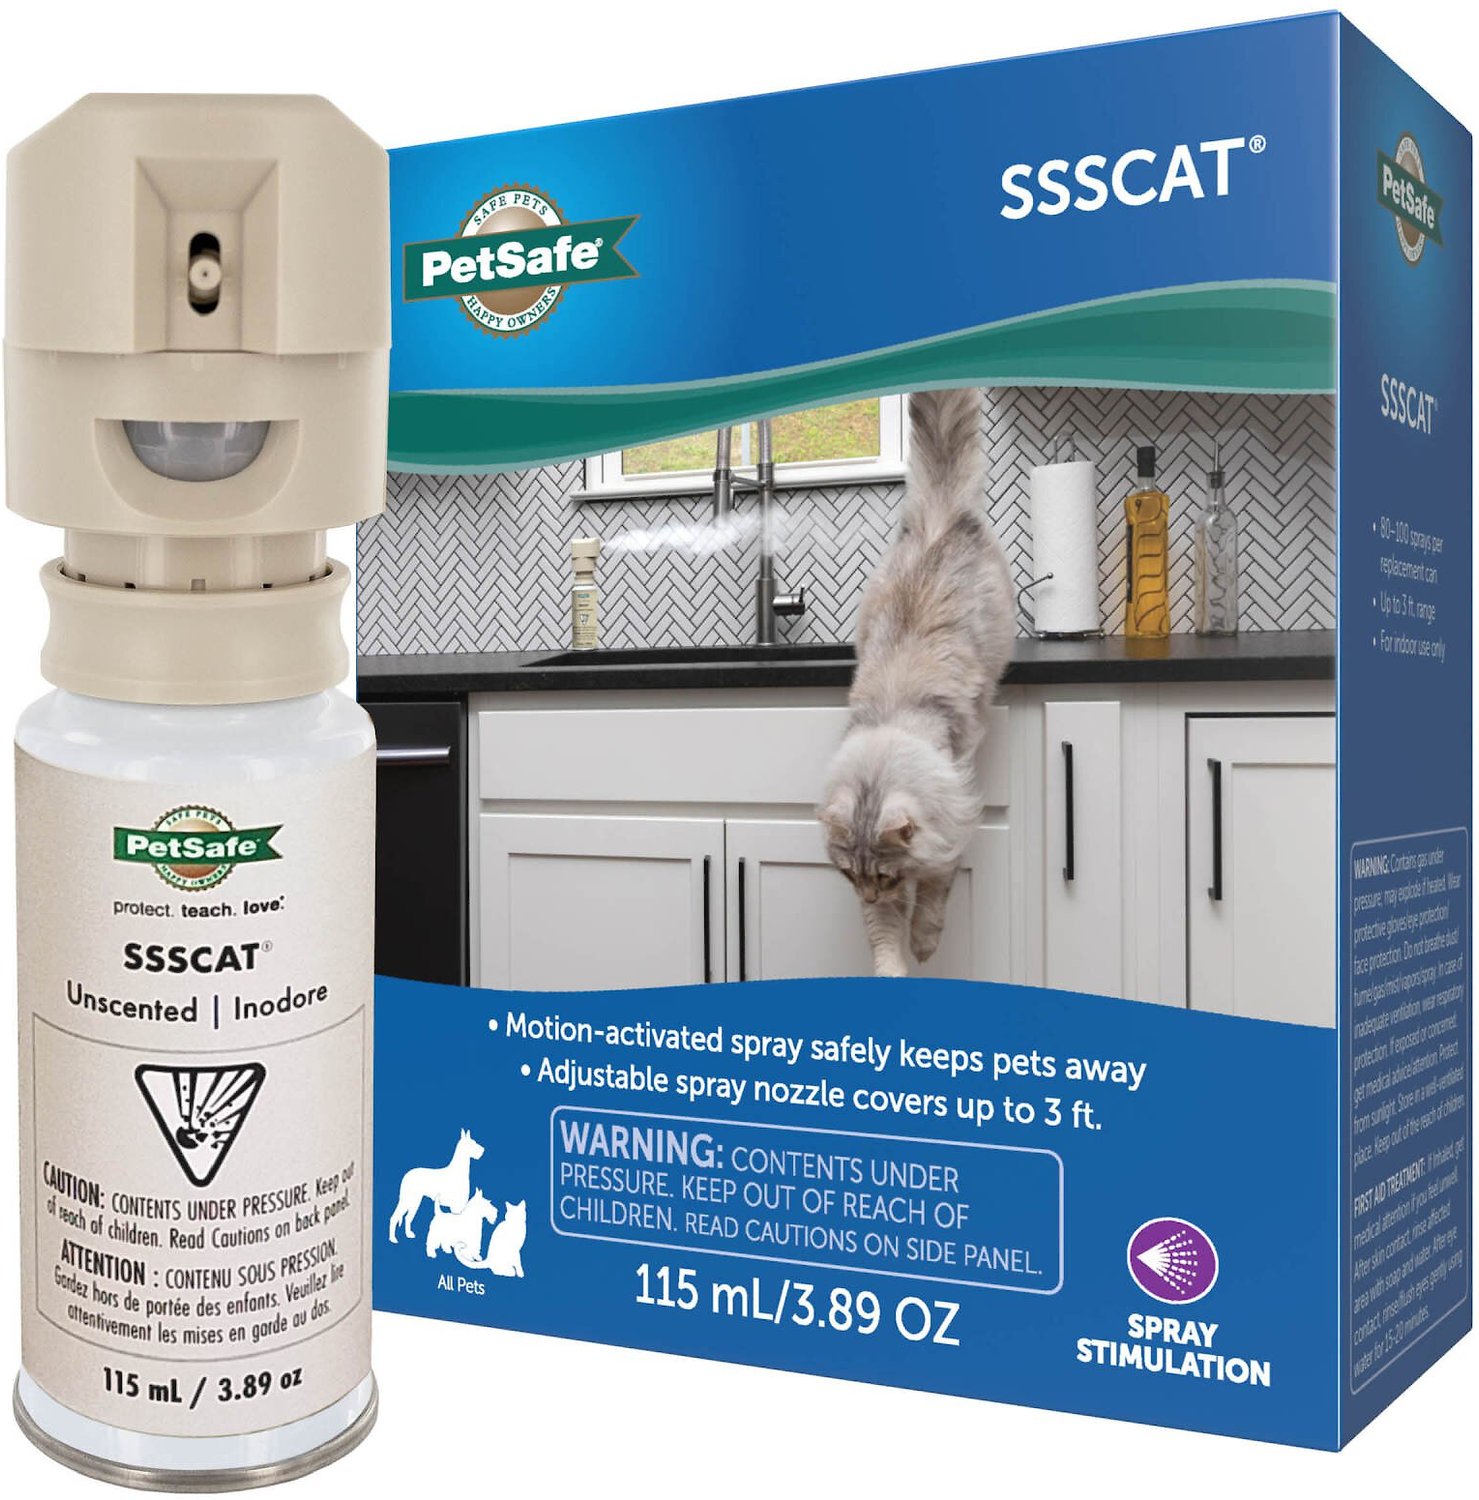 PetSafe SSSCAT Deterrent Cat Spray, 3.89oz bottle